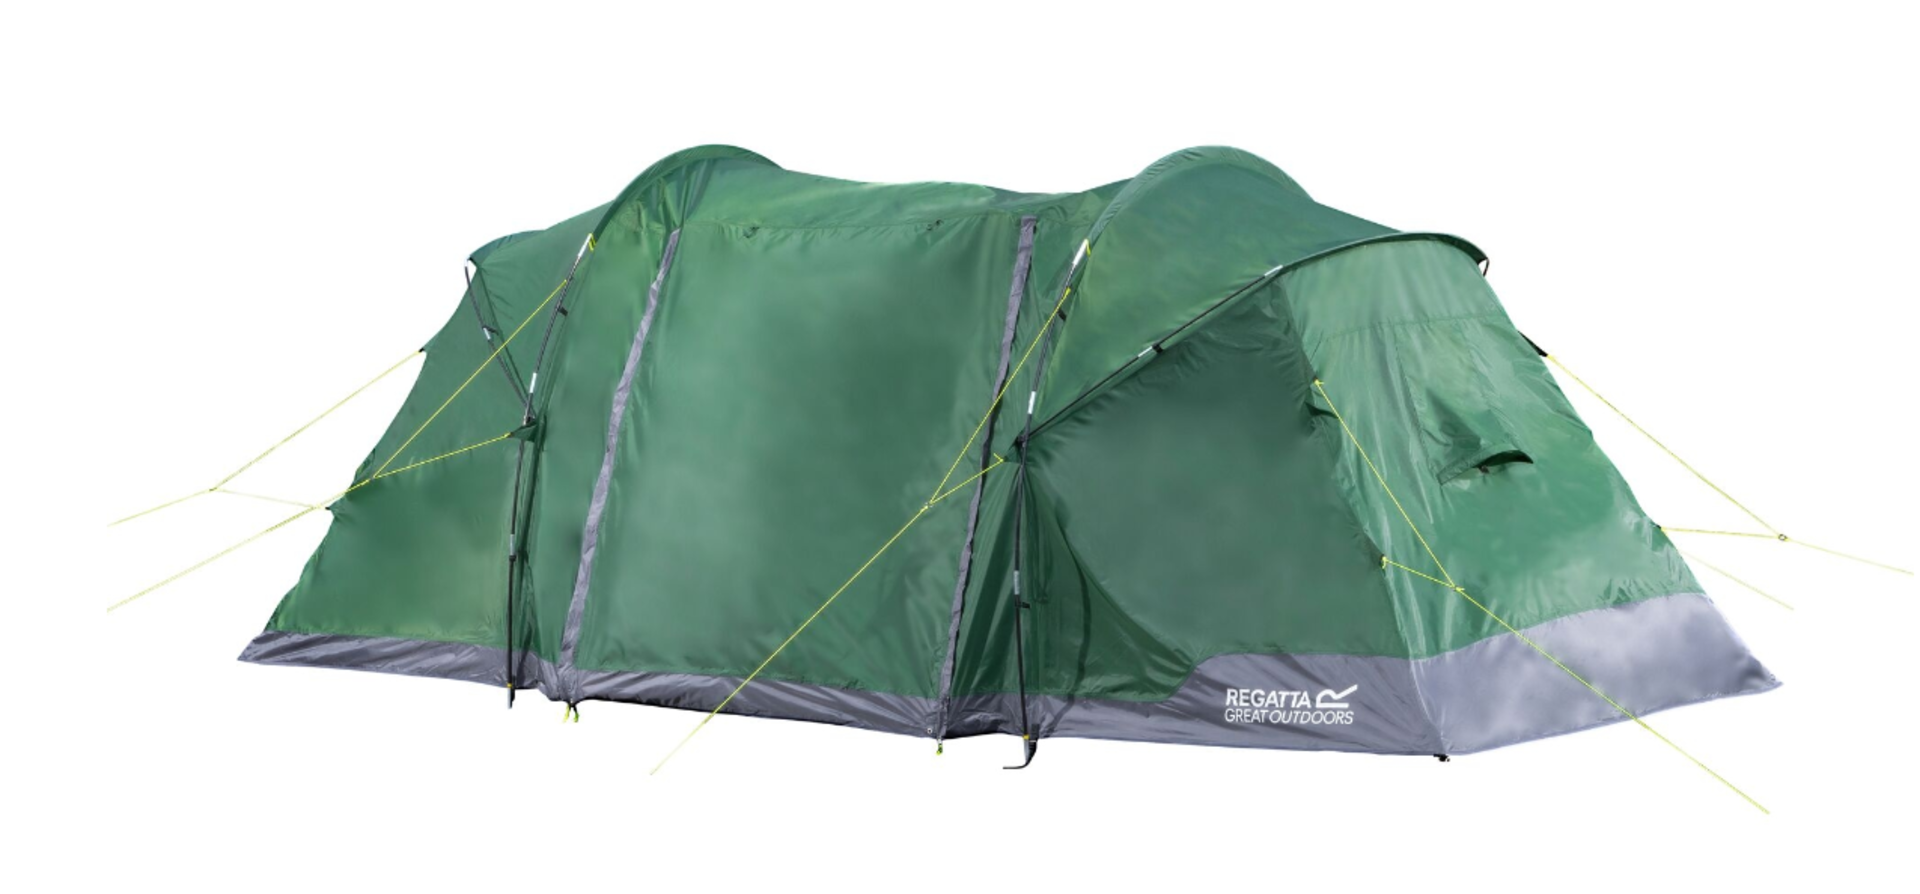 New & Boxed Kivu Hub 6 Man Tent. RRP £799. (ROW7-bx980) Spacious and waterproof, our Kivu Hub 6-